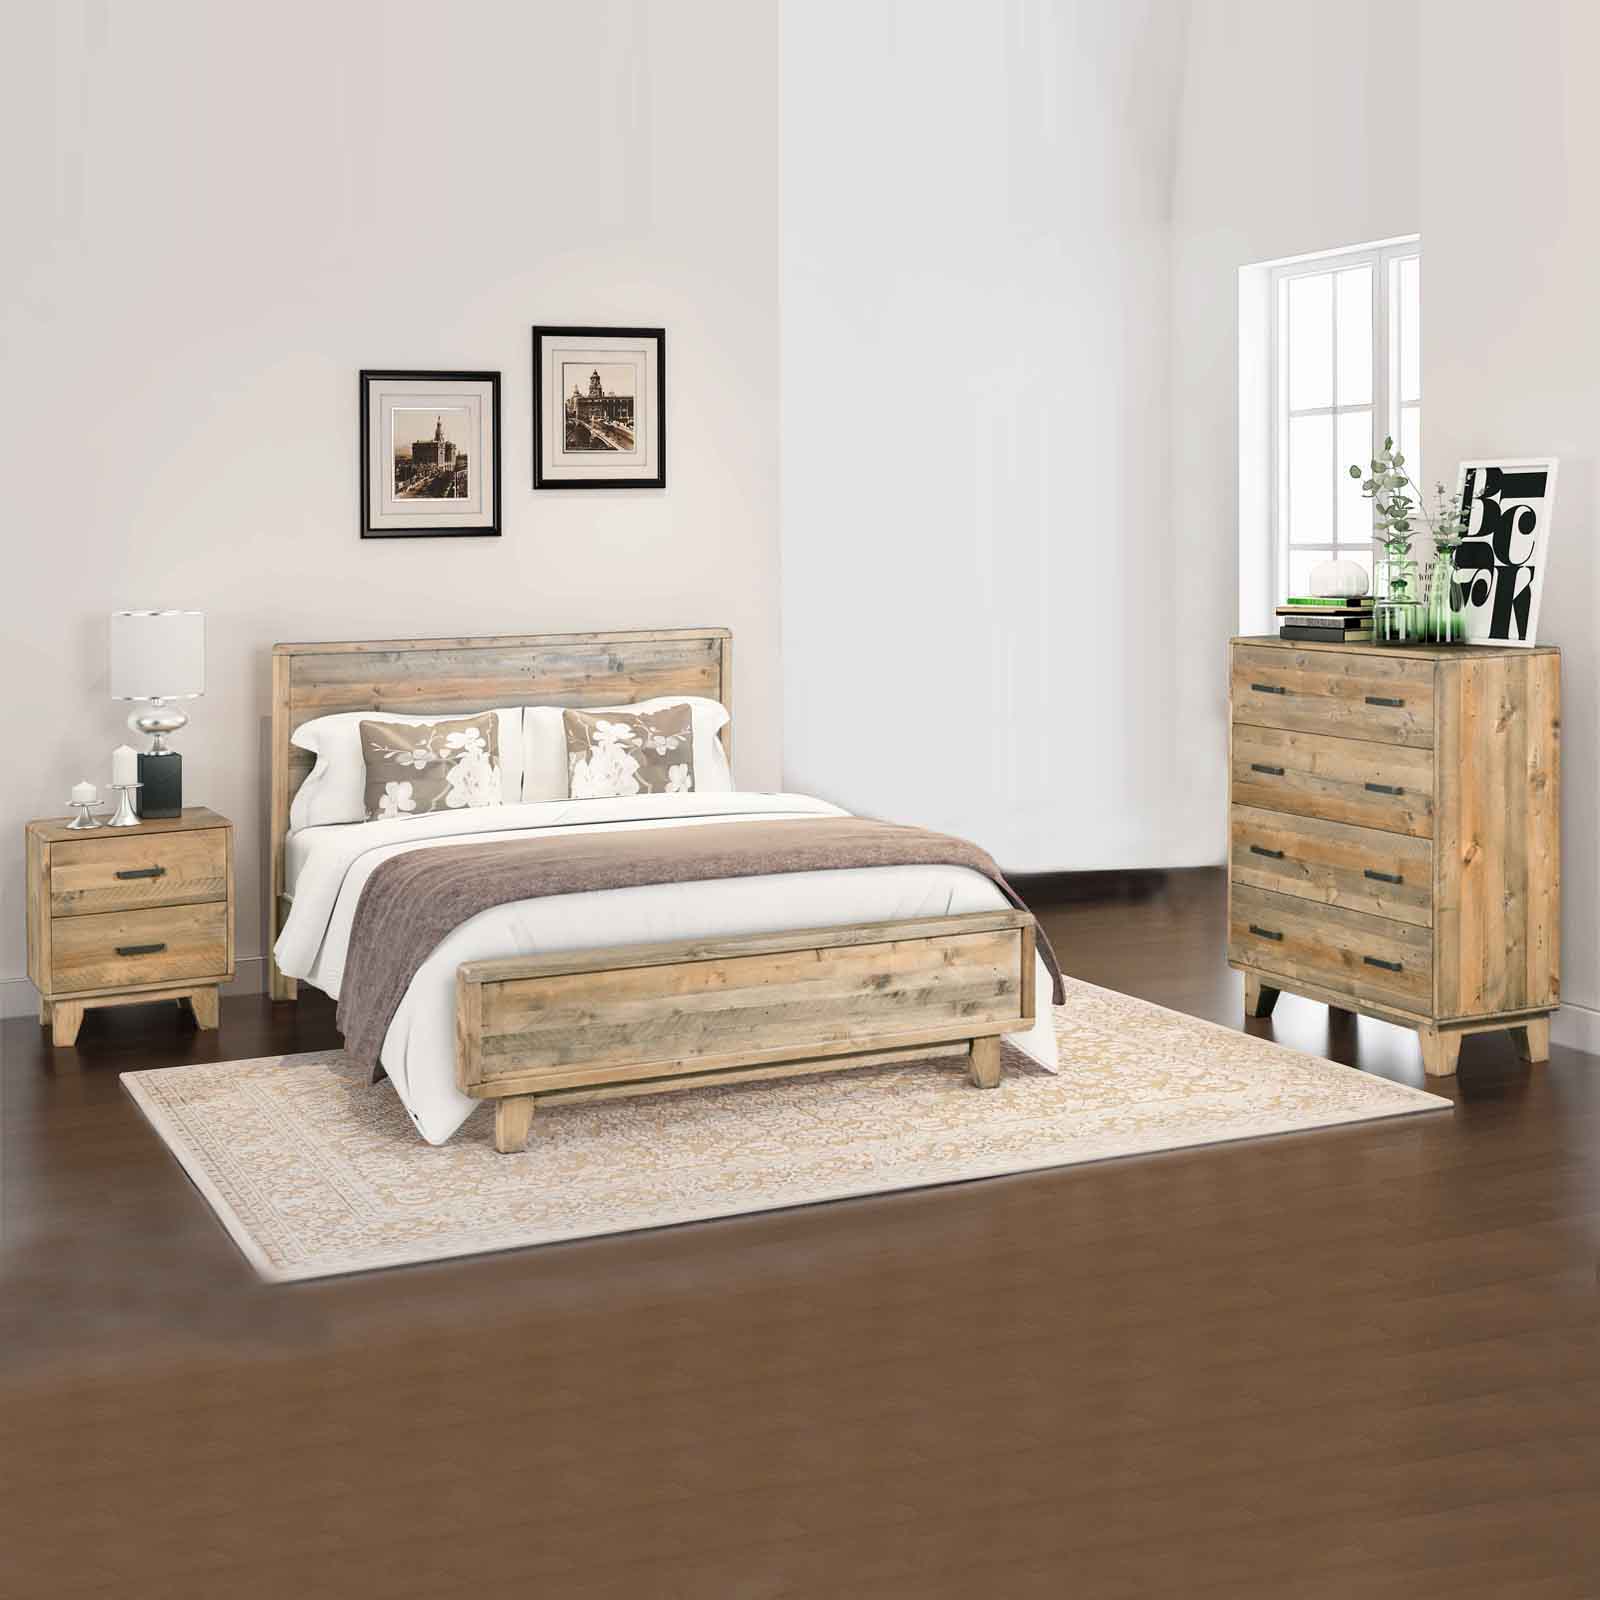 Wesley 4 Pieces Bedroom Suite King Size in Solid Wood Antique Design Light Brown Bed, Bedside Table